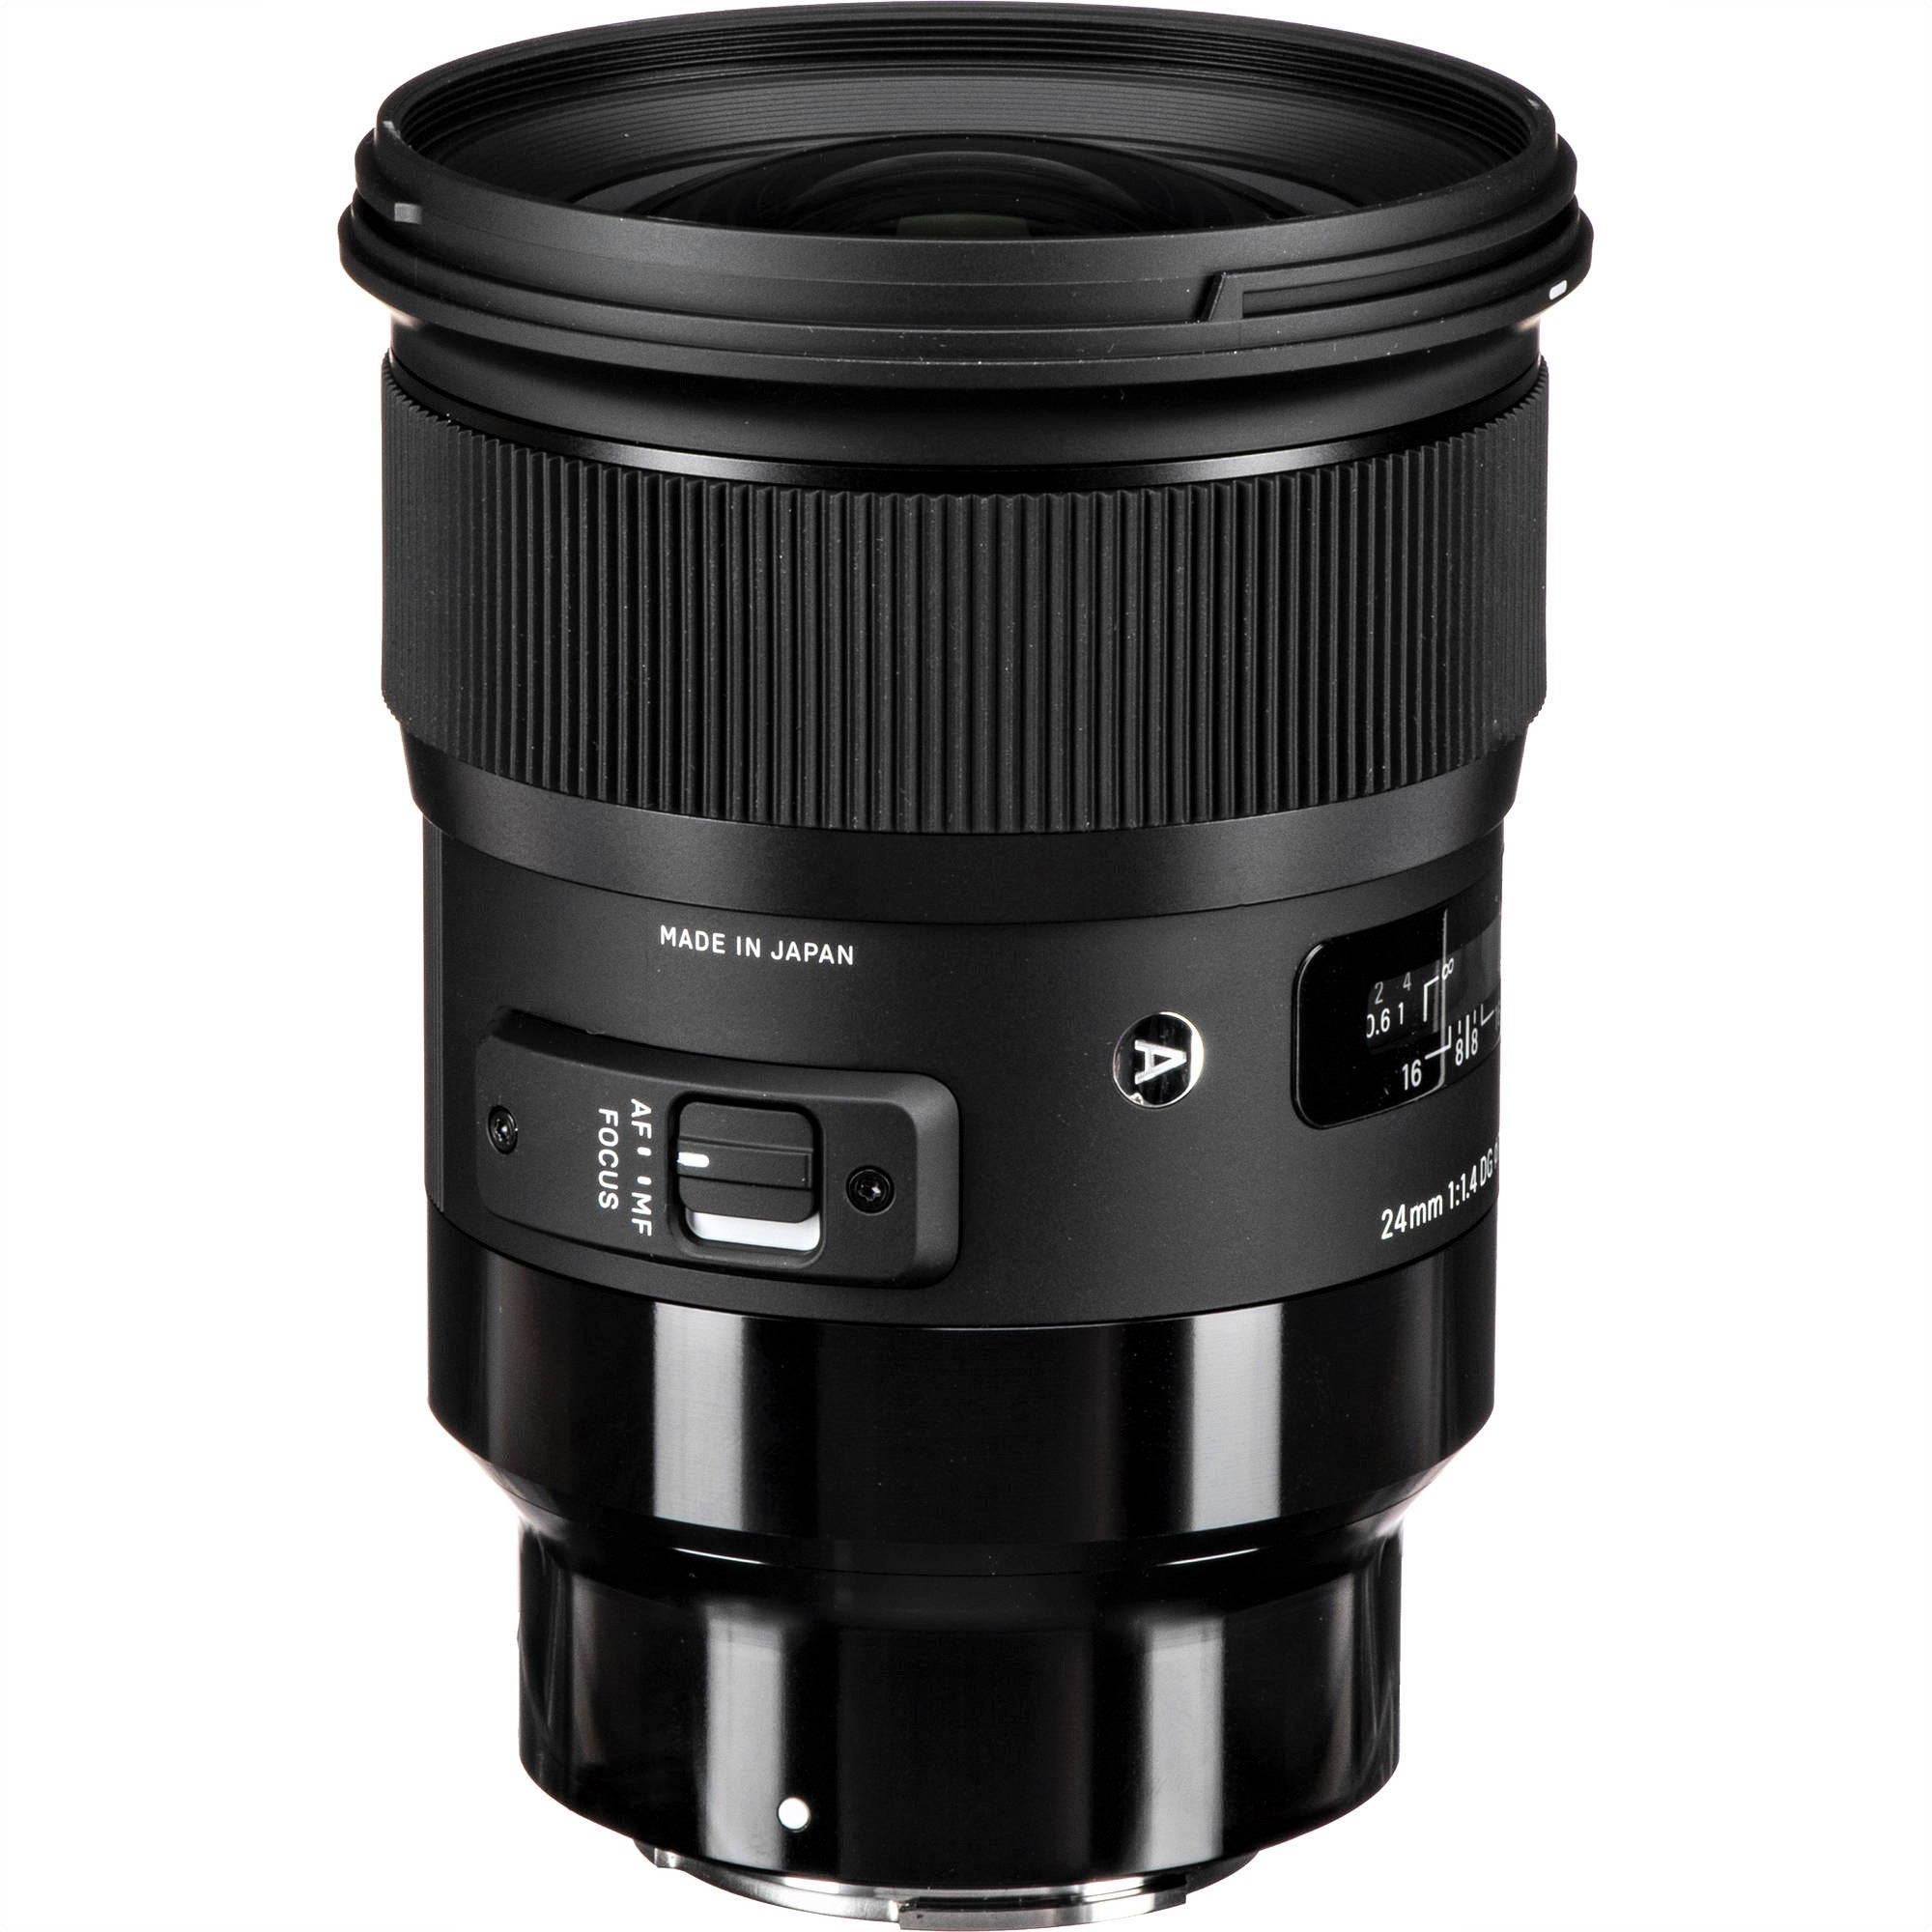 Sigma 24mm F1.4 DG HSM Art Lens for Leica L